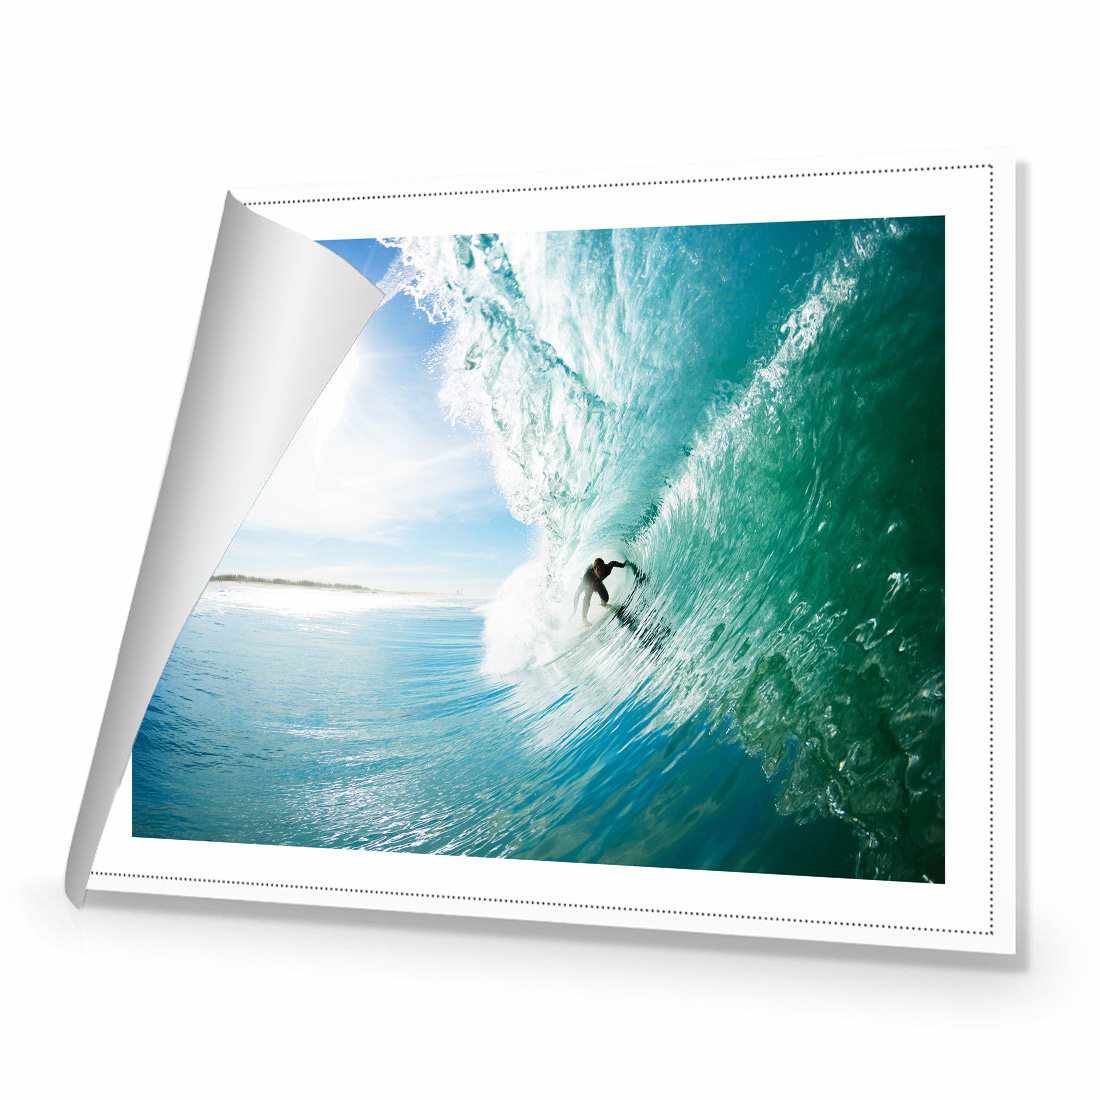 Surfer Under Wave Canvas Art-Canvas-Wall Art Designs-45x30cm-Rolled Canvas-Wall Art Designs